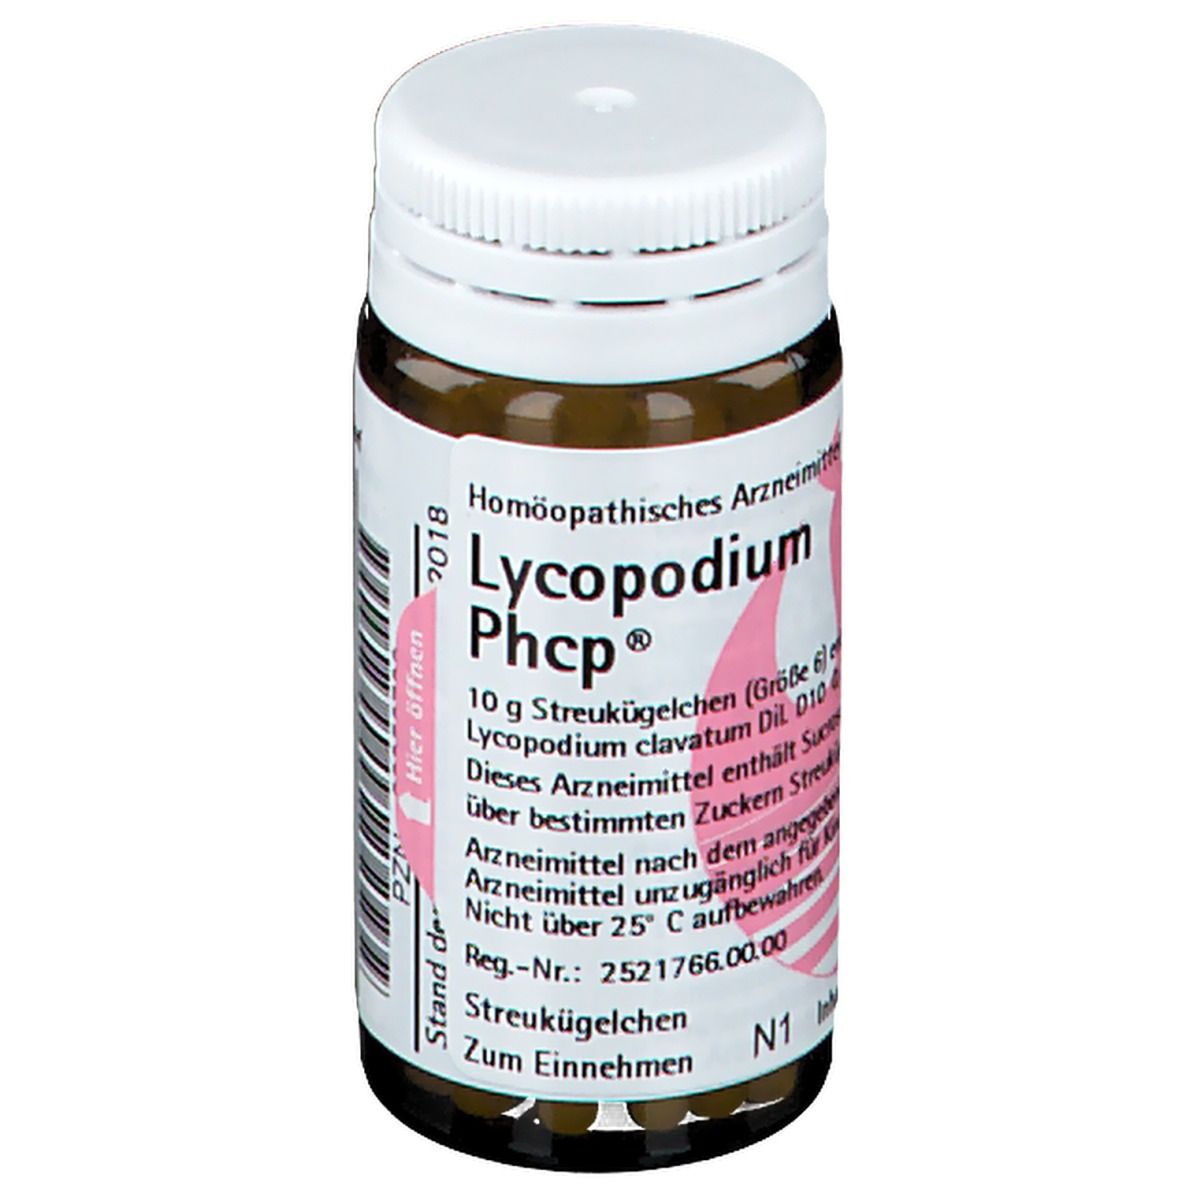 Lycopodium Phcp®